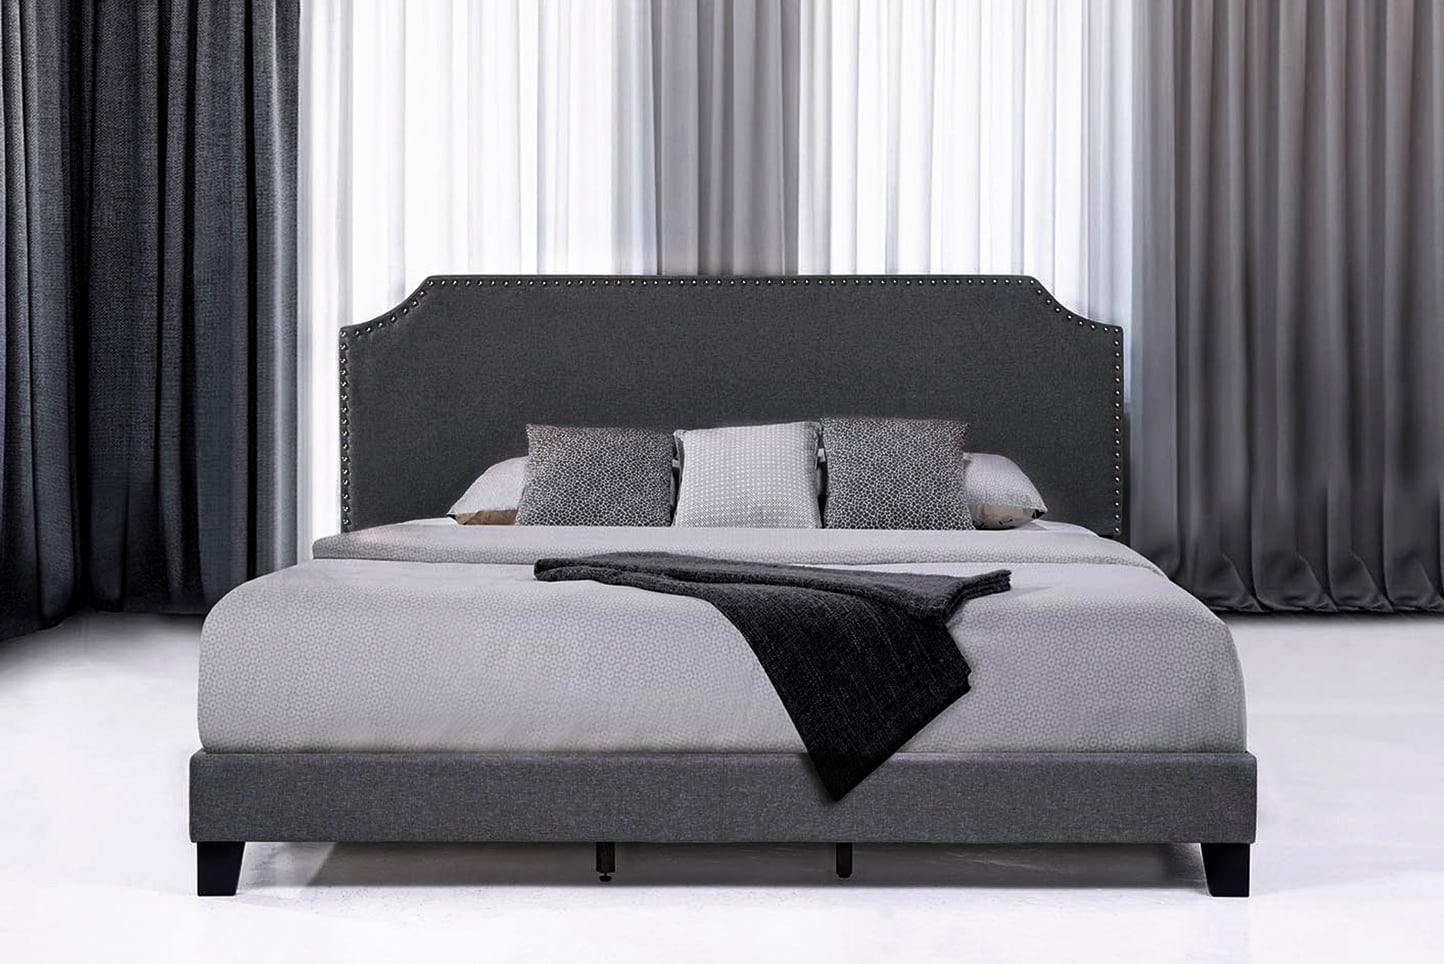 Upholstered Bed Frame With Nailhead, Short King Size Bed Frame